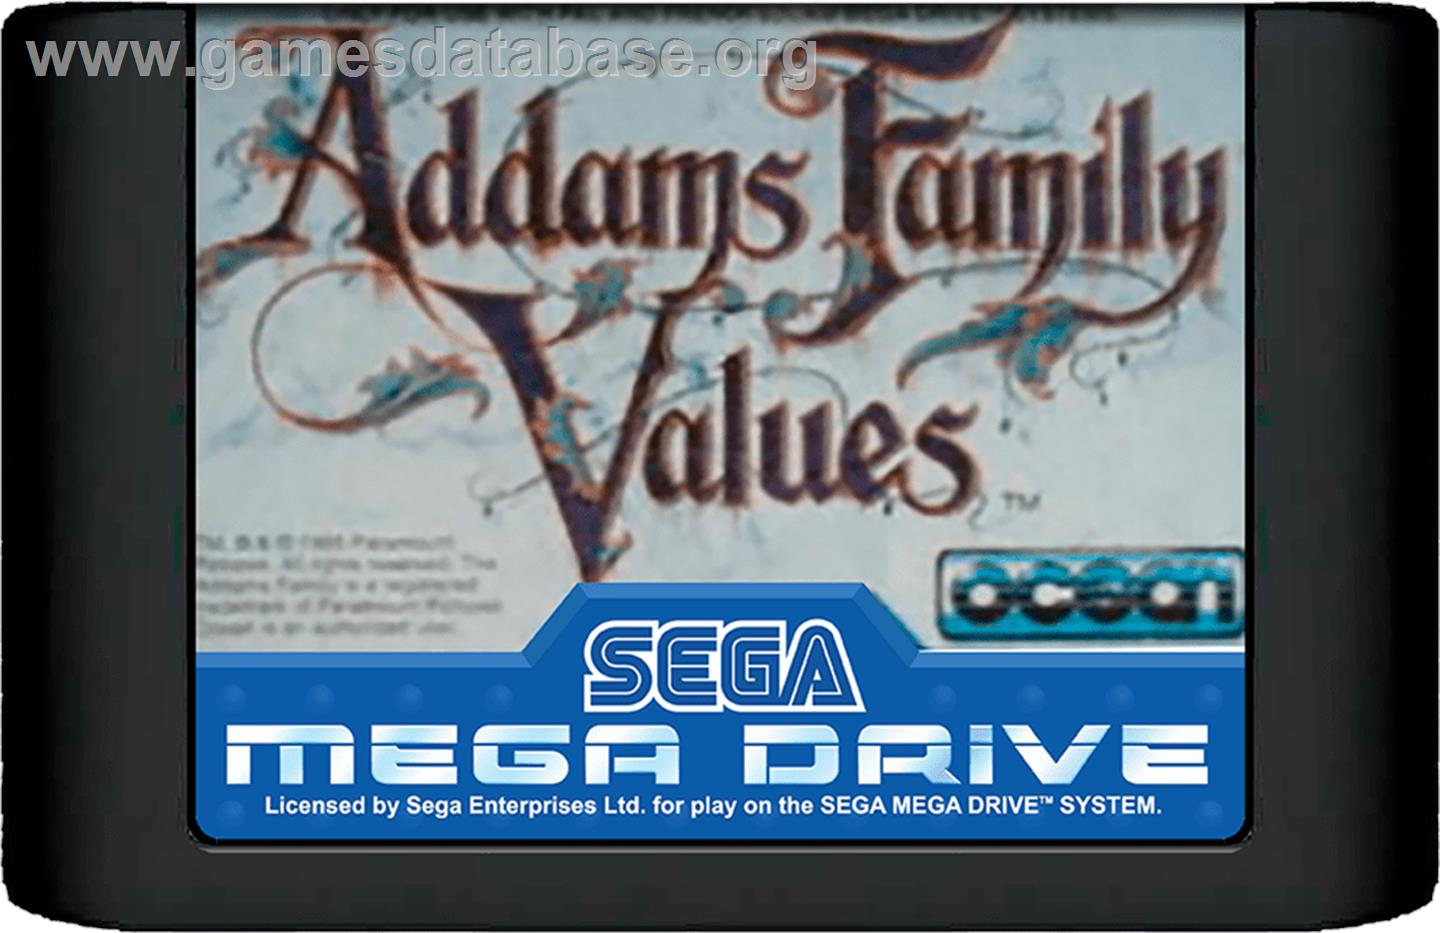 Addams Family Values - Sega Genesis - Artwork - Cartridge